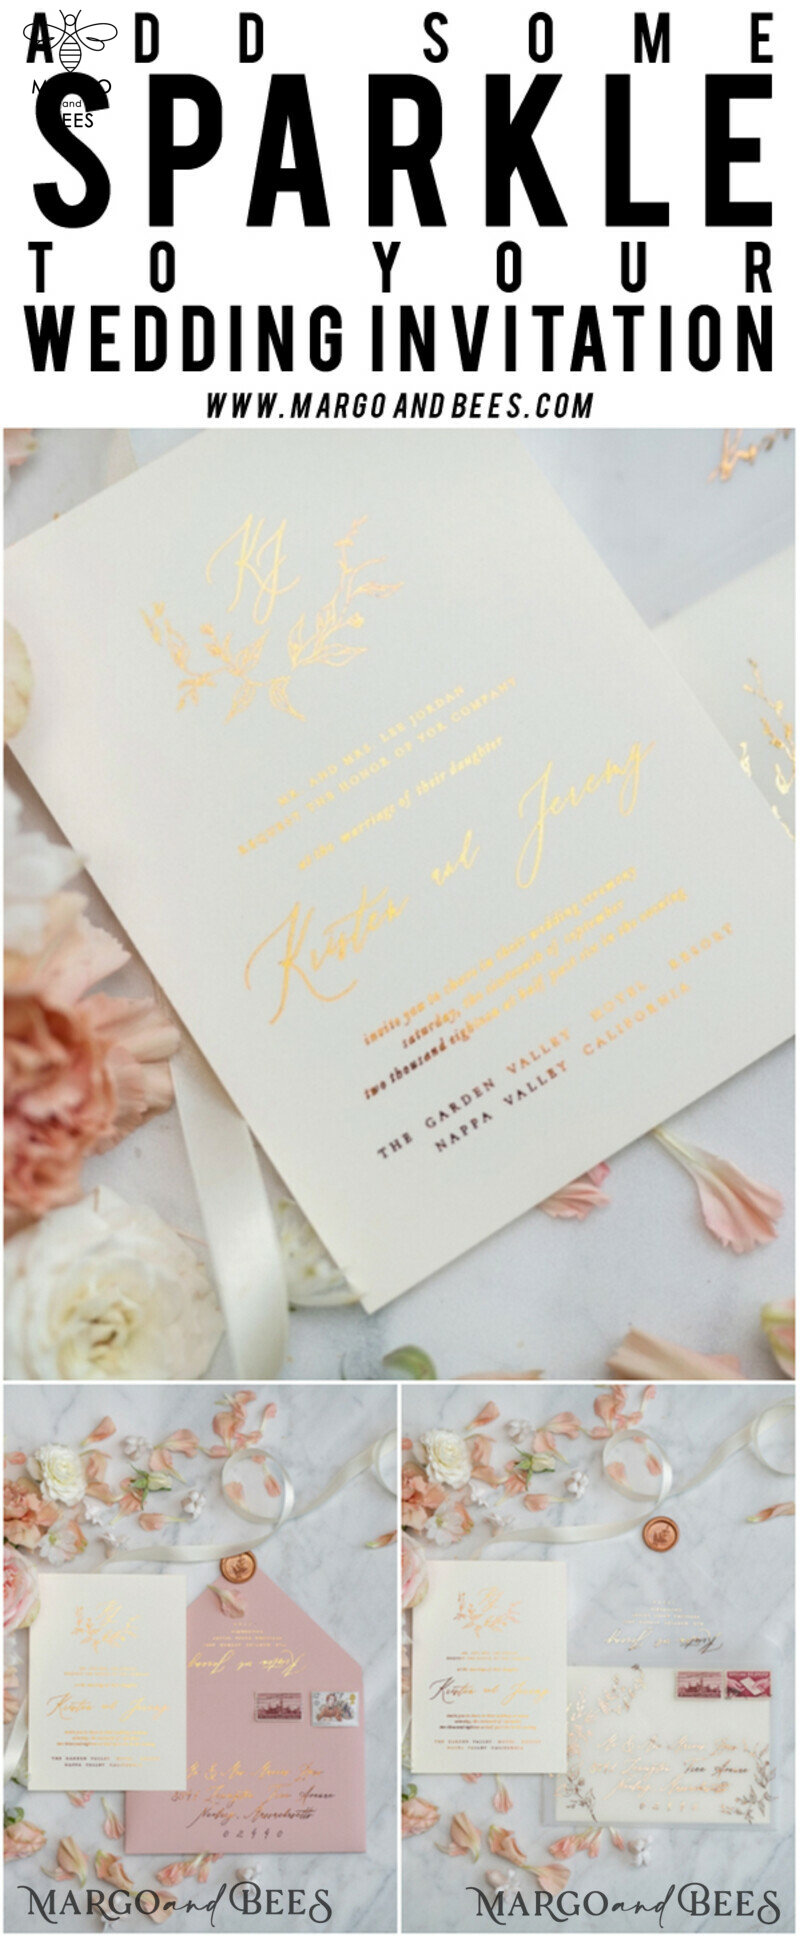 Bespoke Vellum Wedding Invitation Suite: Romantic Blush Pink and Glamour Gold Foil for Elegant Golden Wedding Invites-41